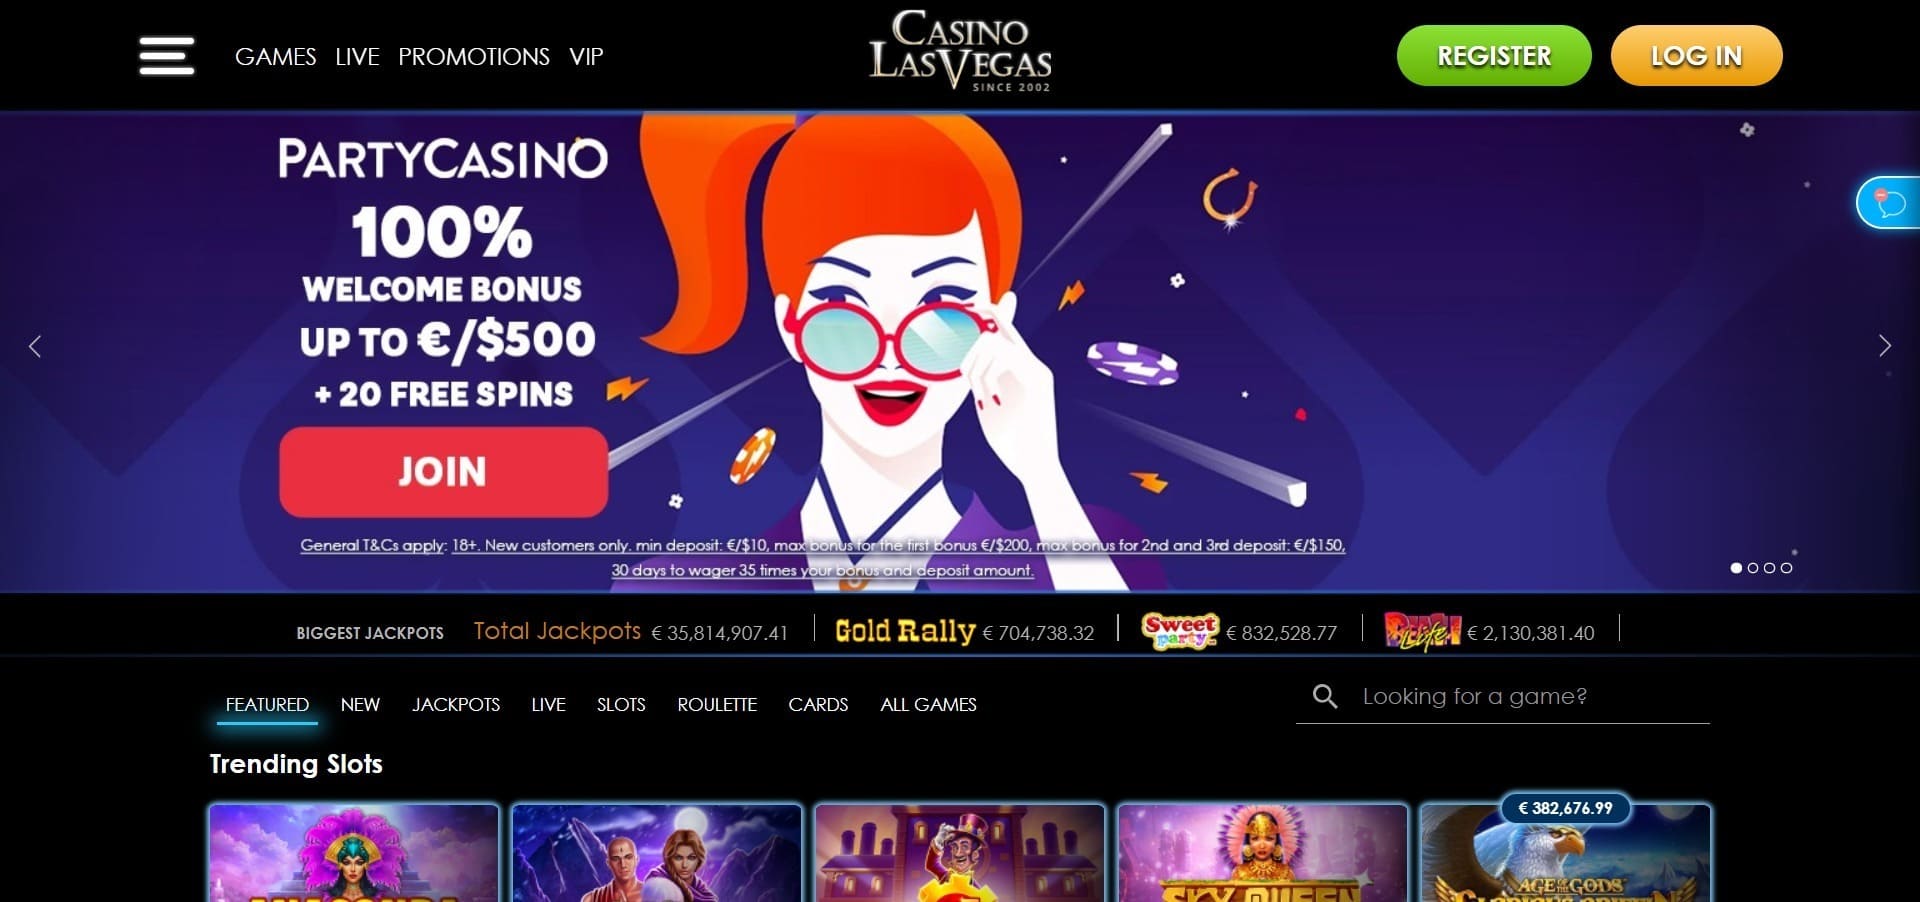 Oficjalna strona kasyna Las Vegas